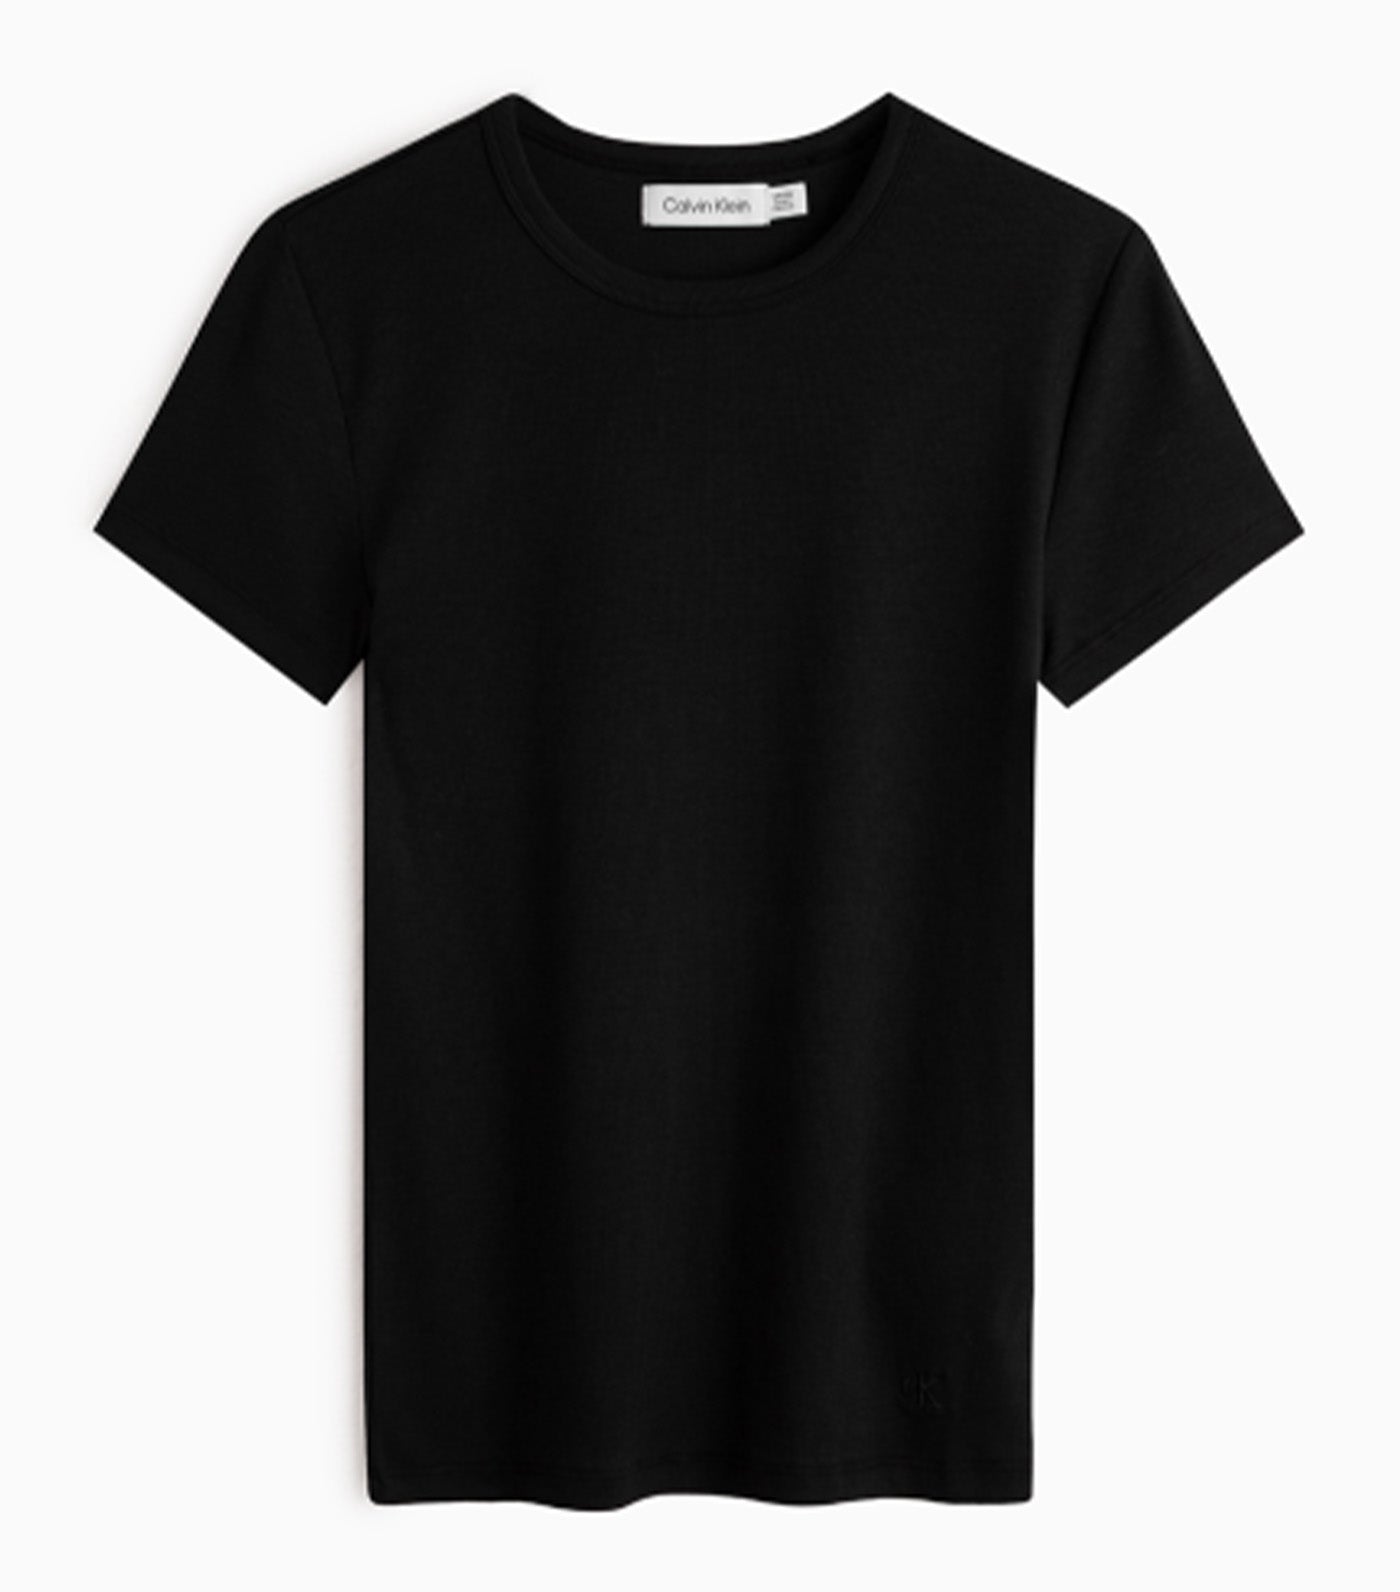 Contour Rib Slim Fit T-Shirt Black Beauty